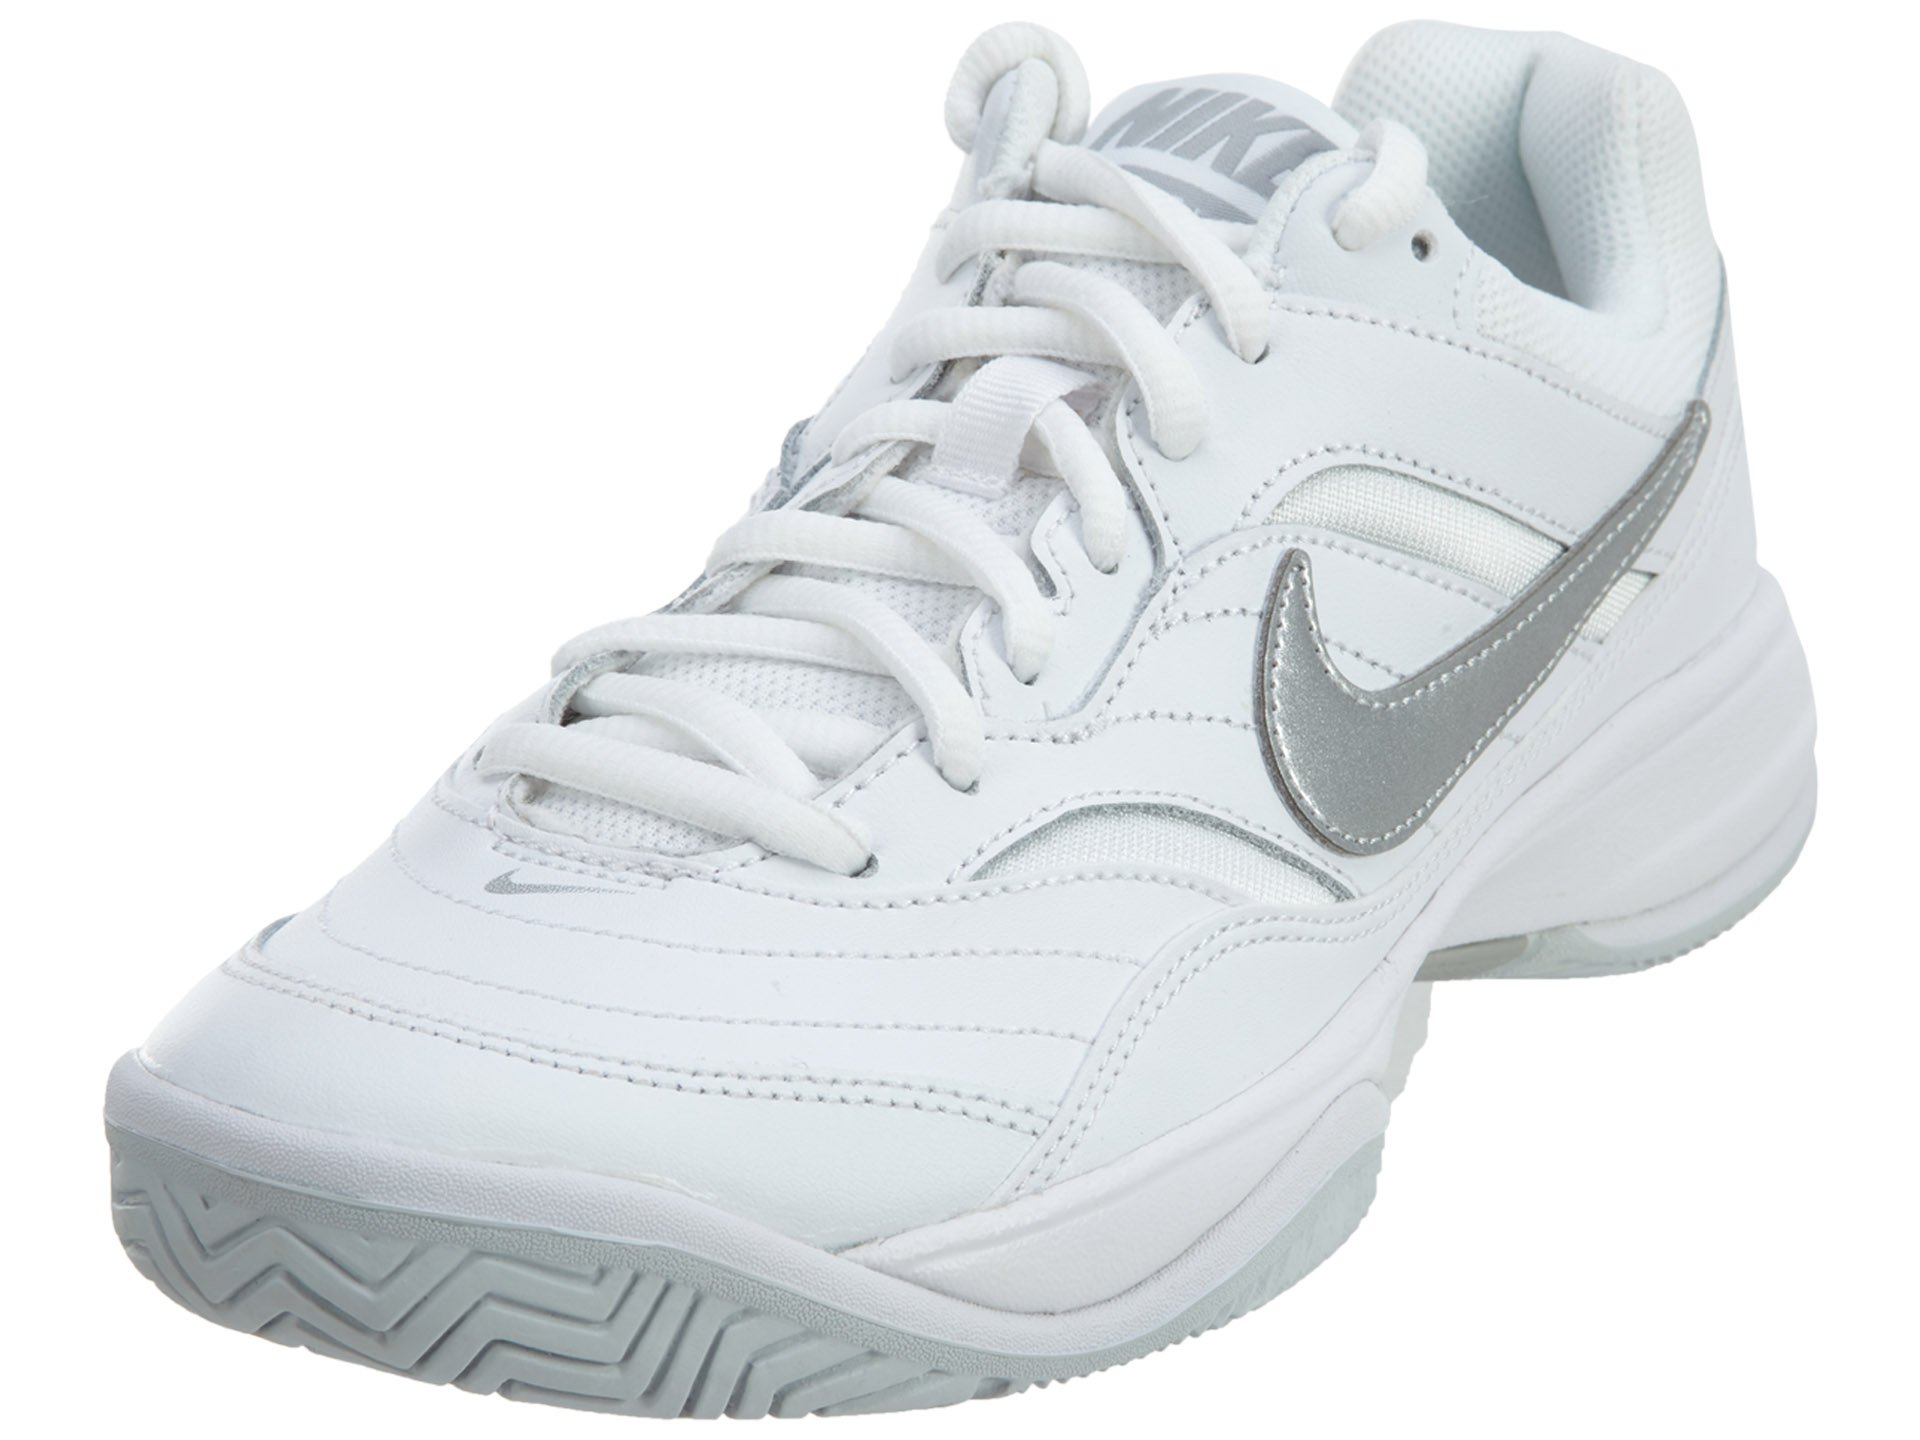 Nike Women #39 s Court Lite Leather Tennis Shoe eBay